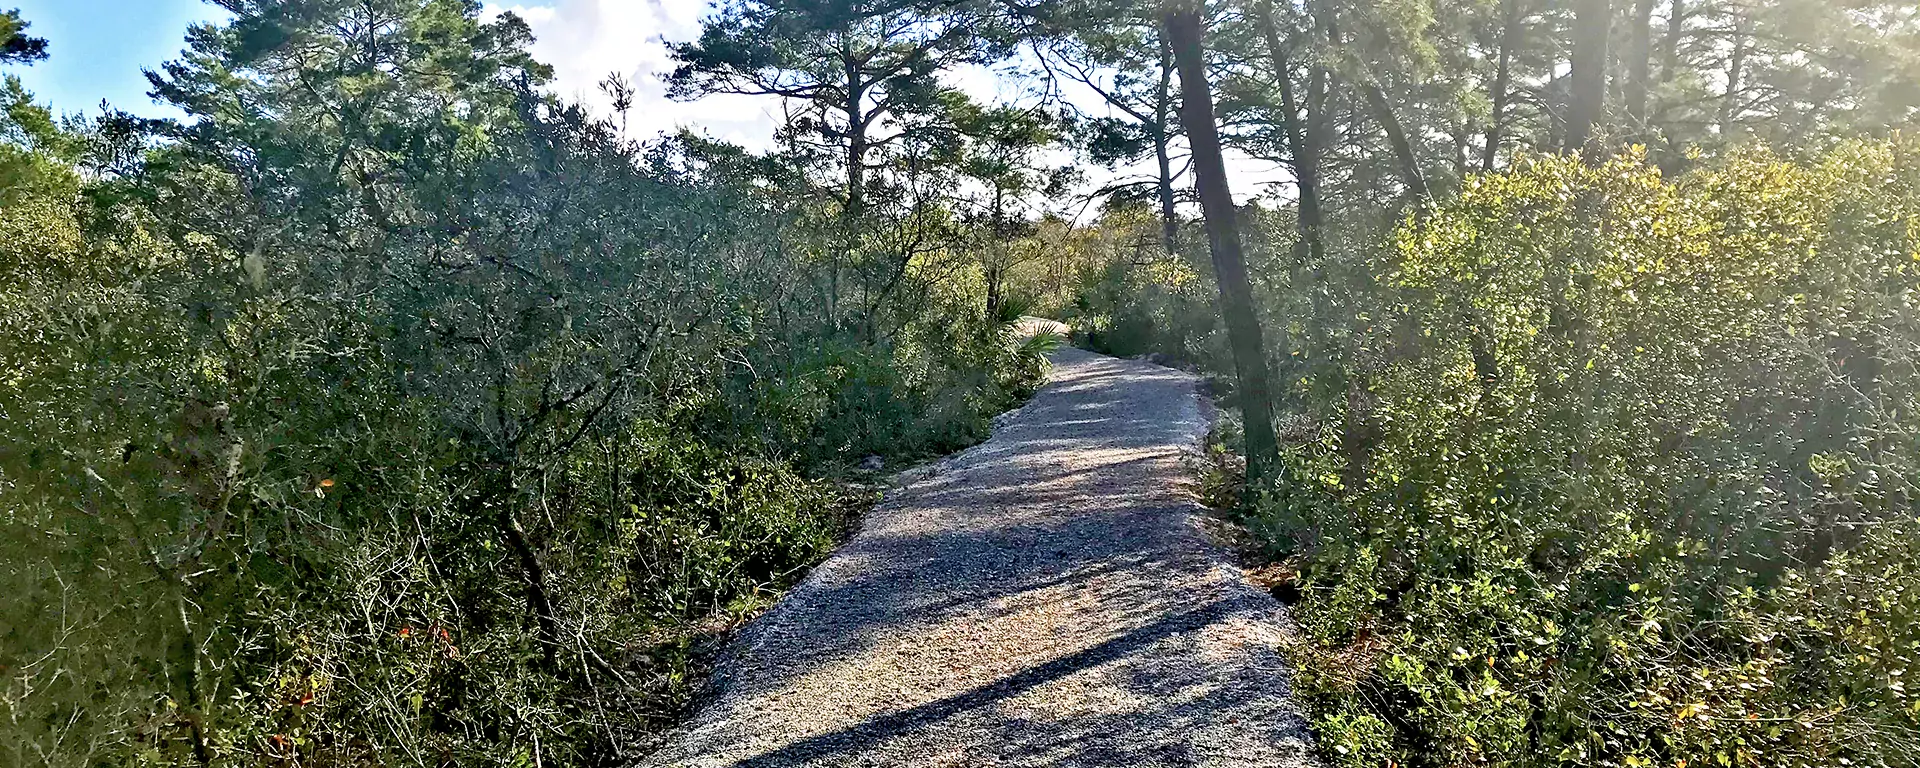 A gravel trail through the Hobe Sound Scrub Preserve